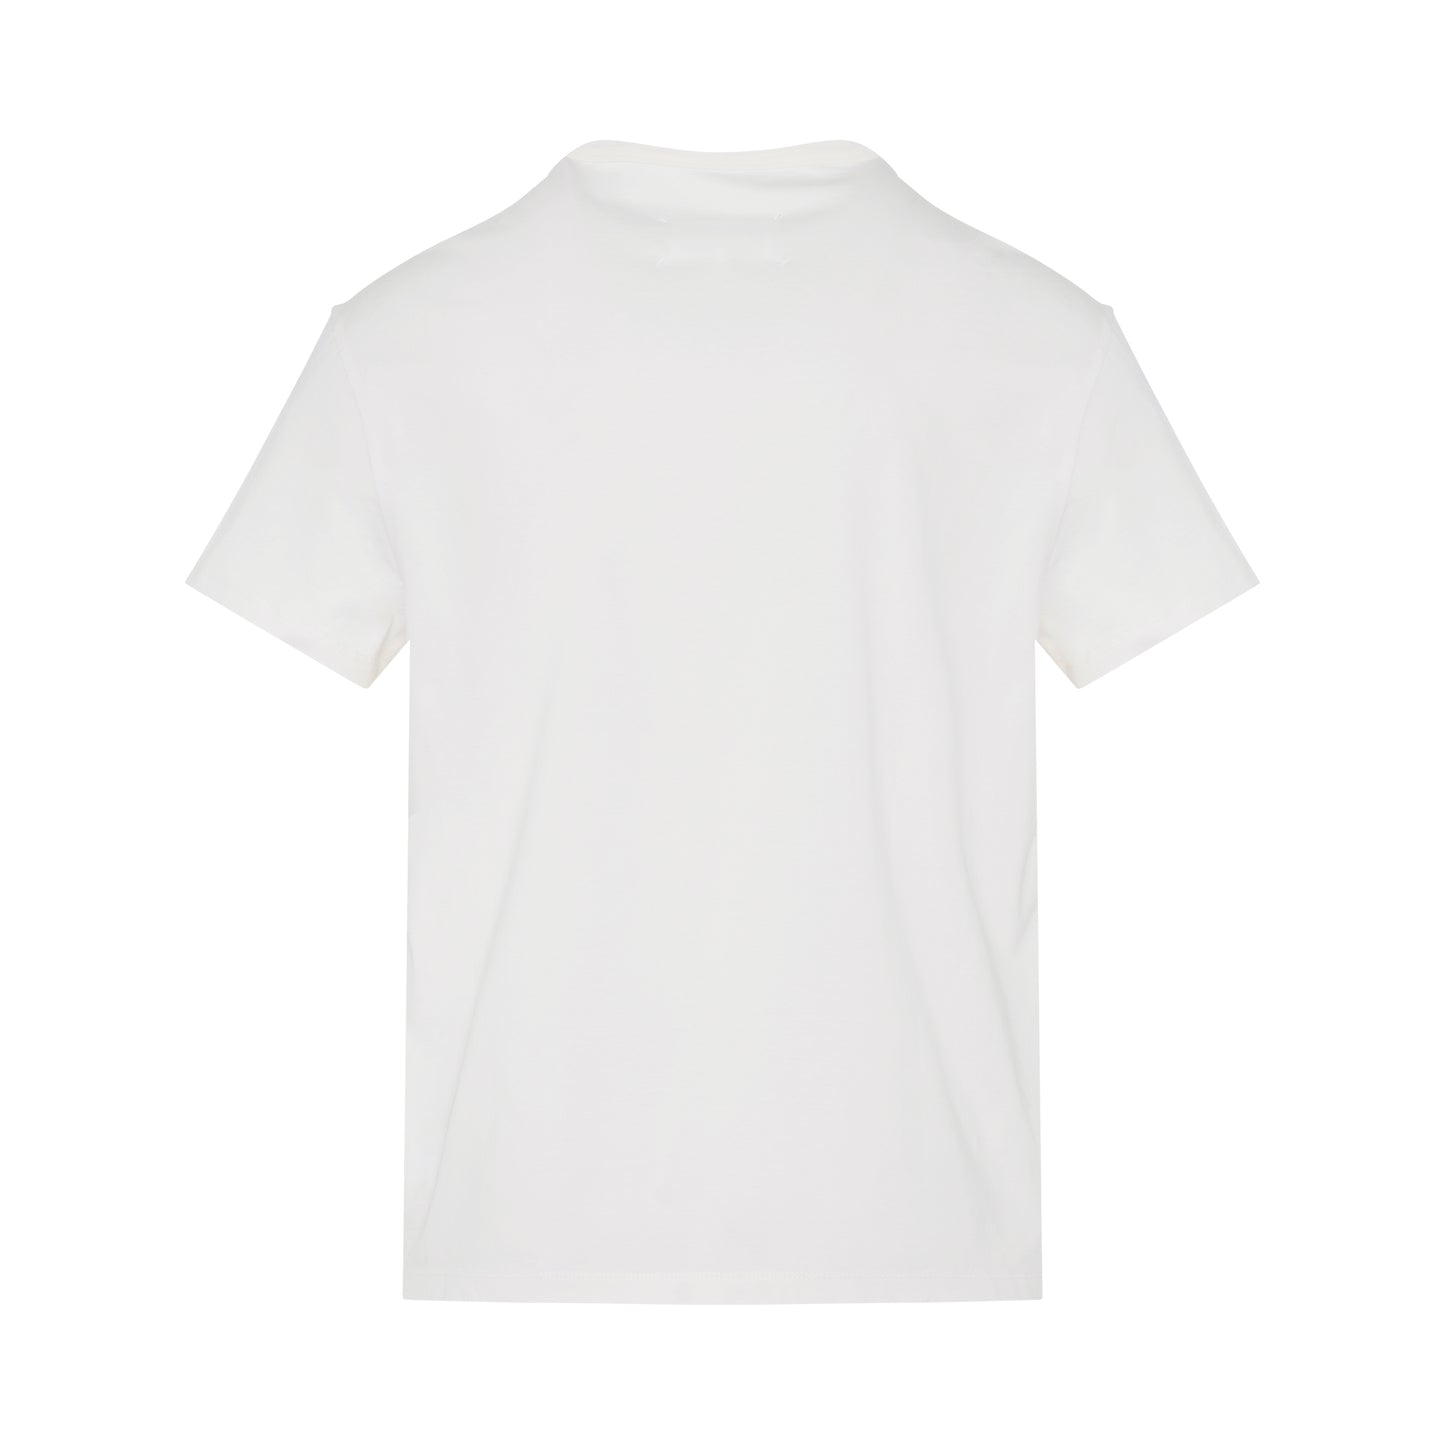 Upside Down Logo T-Shirt in White